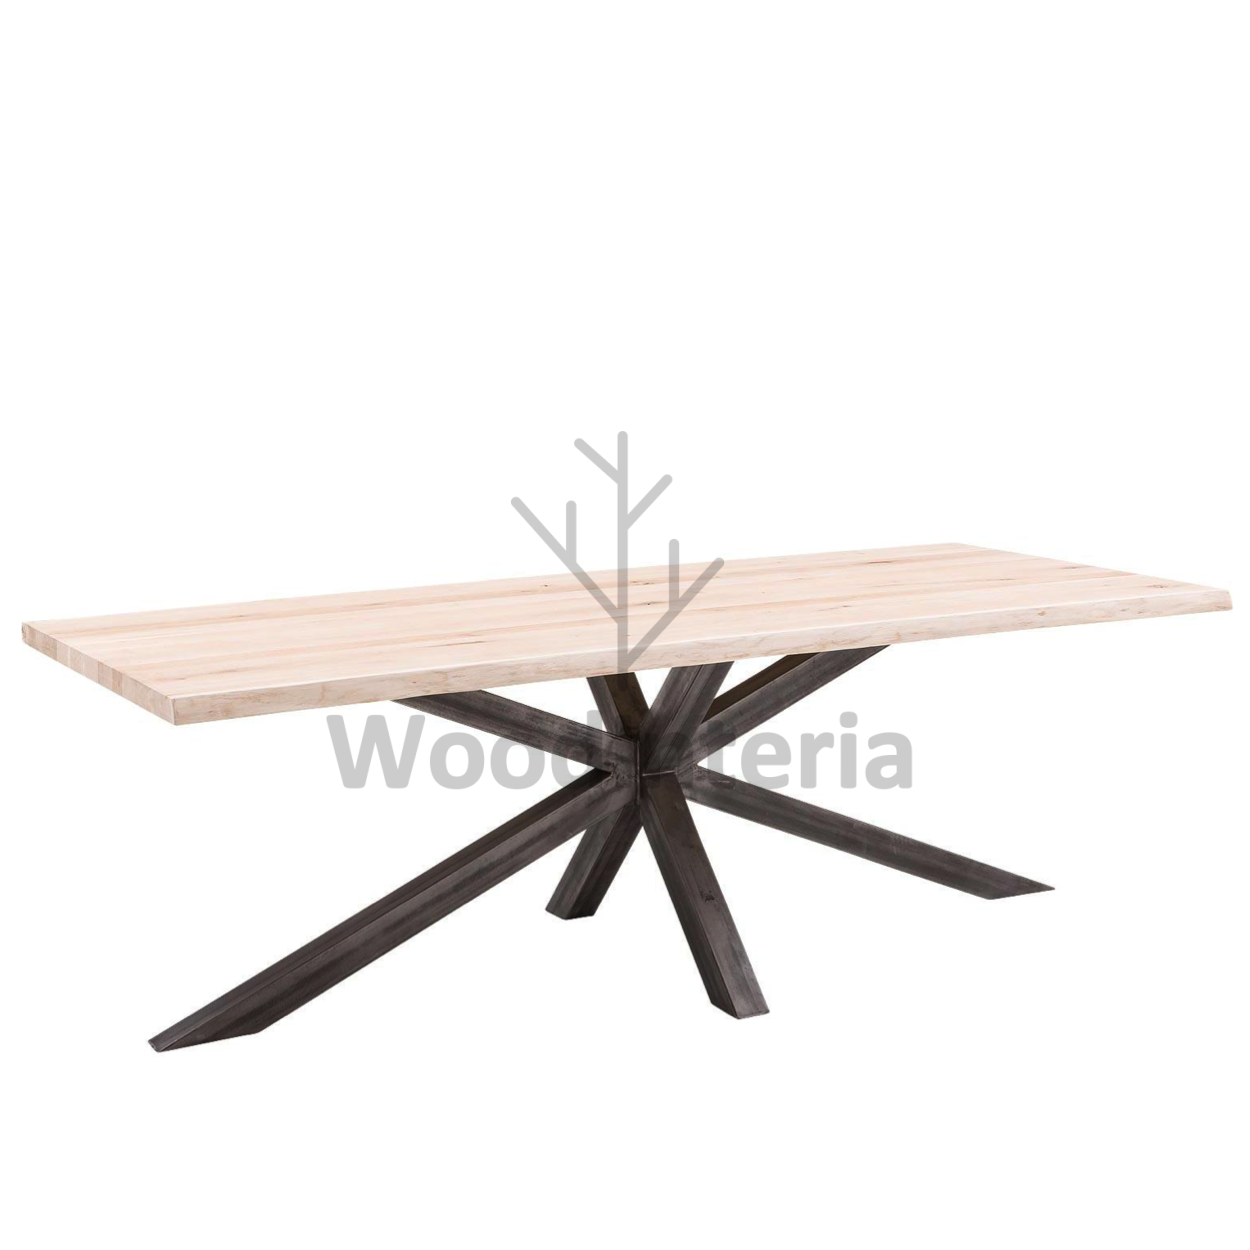 фото обеденный стол double top octopus 2 в стиле лофт эко | WoodInteria